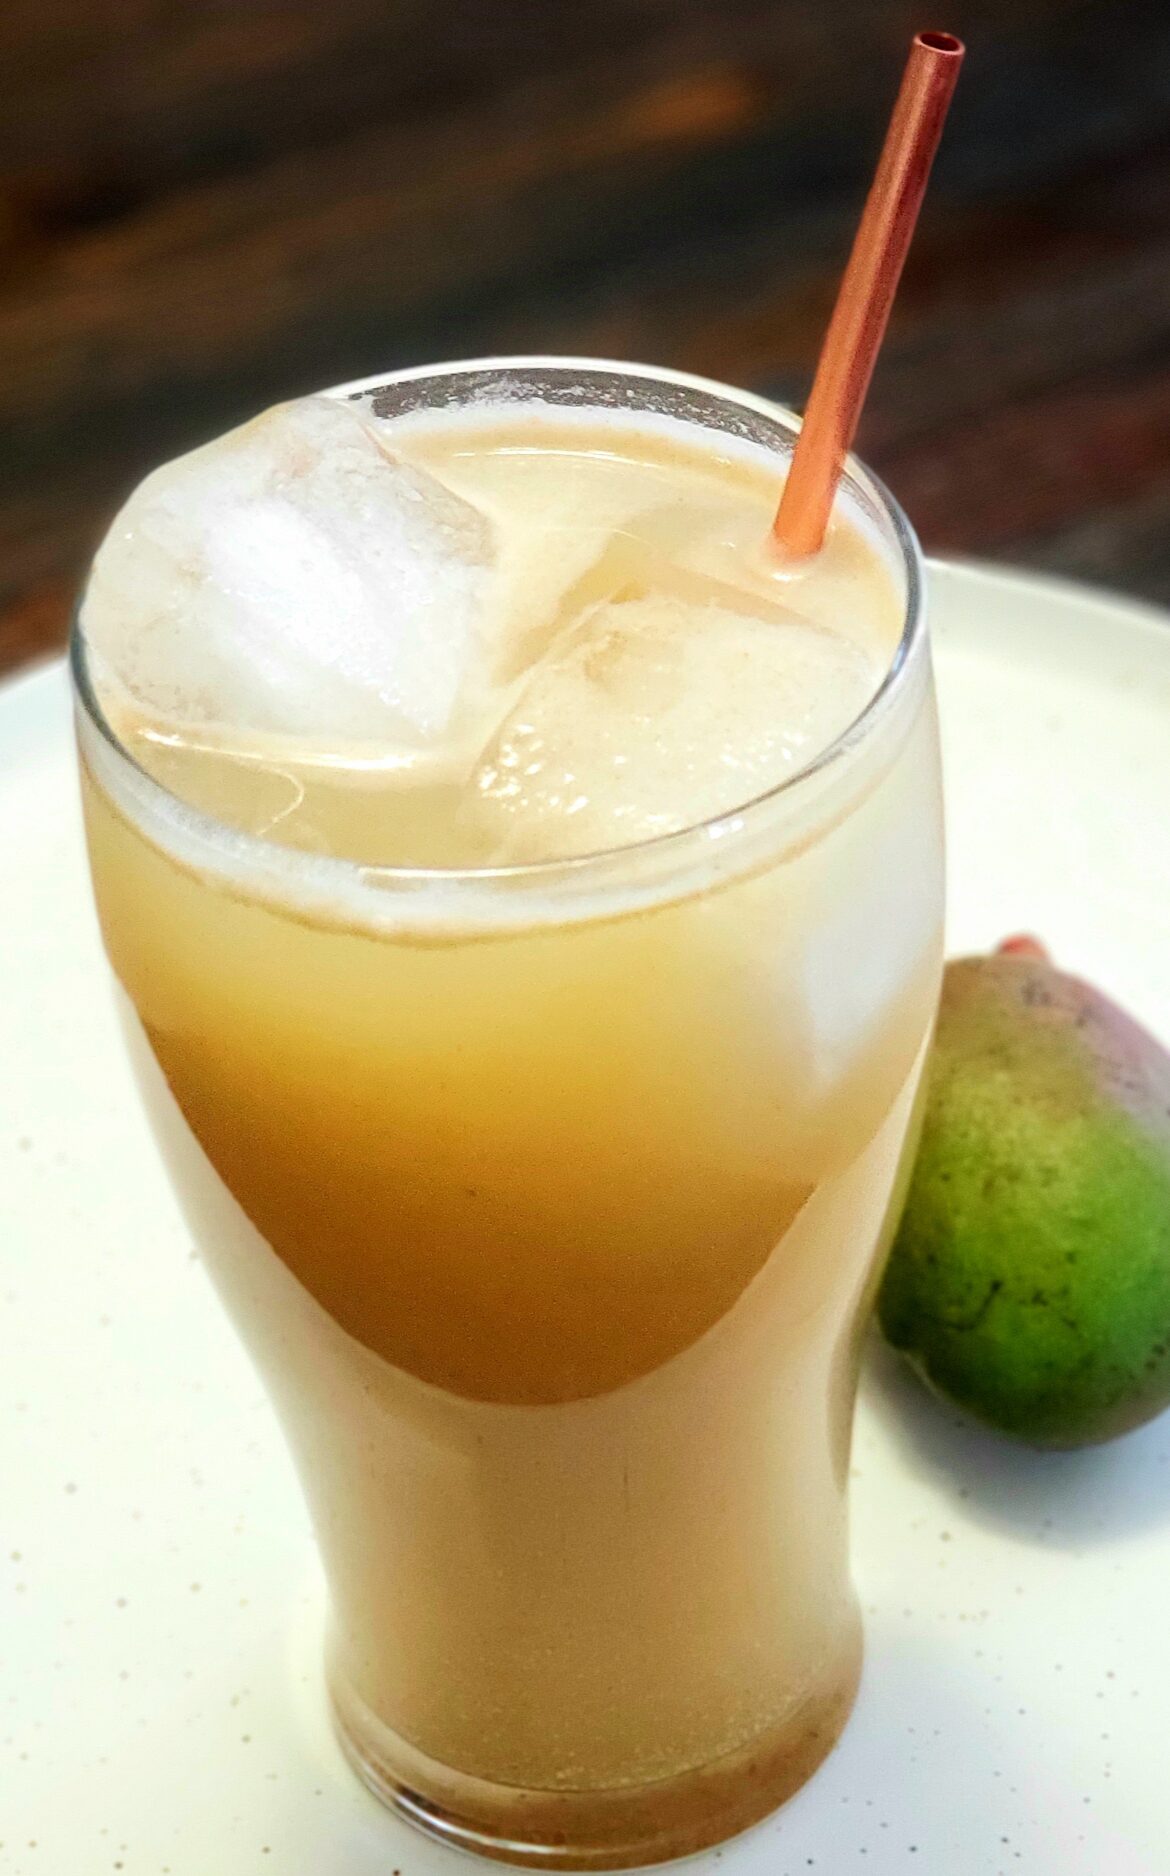 Keri no baflo / Aam Panna / Raw-Unripe Mango Juice